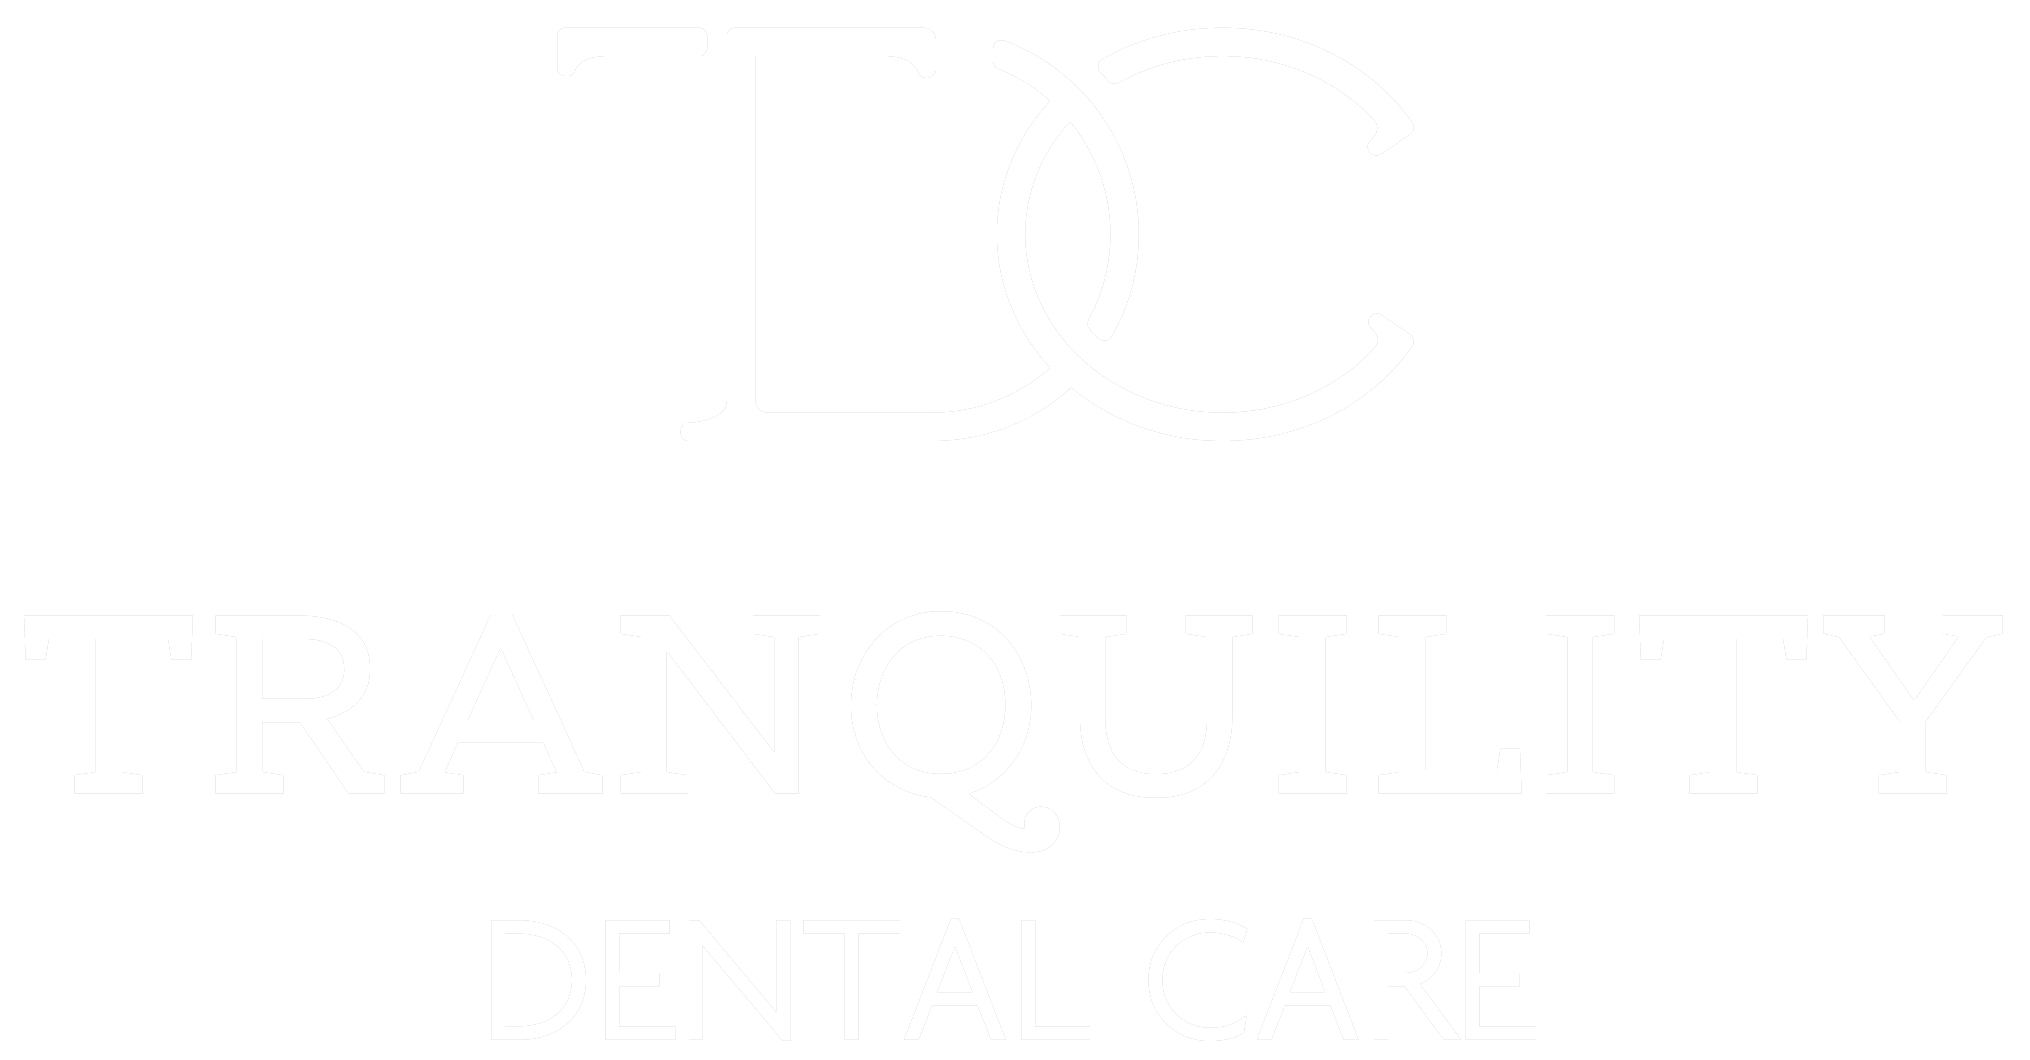 Tranquility Dental Care | Bucks County Dentist